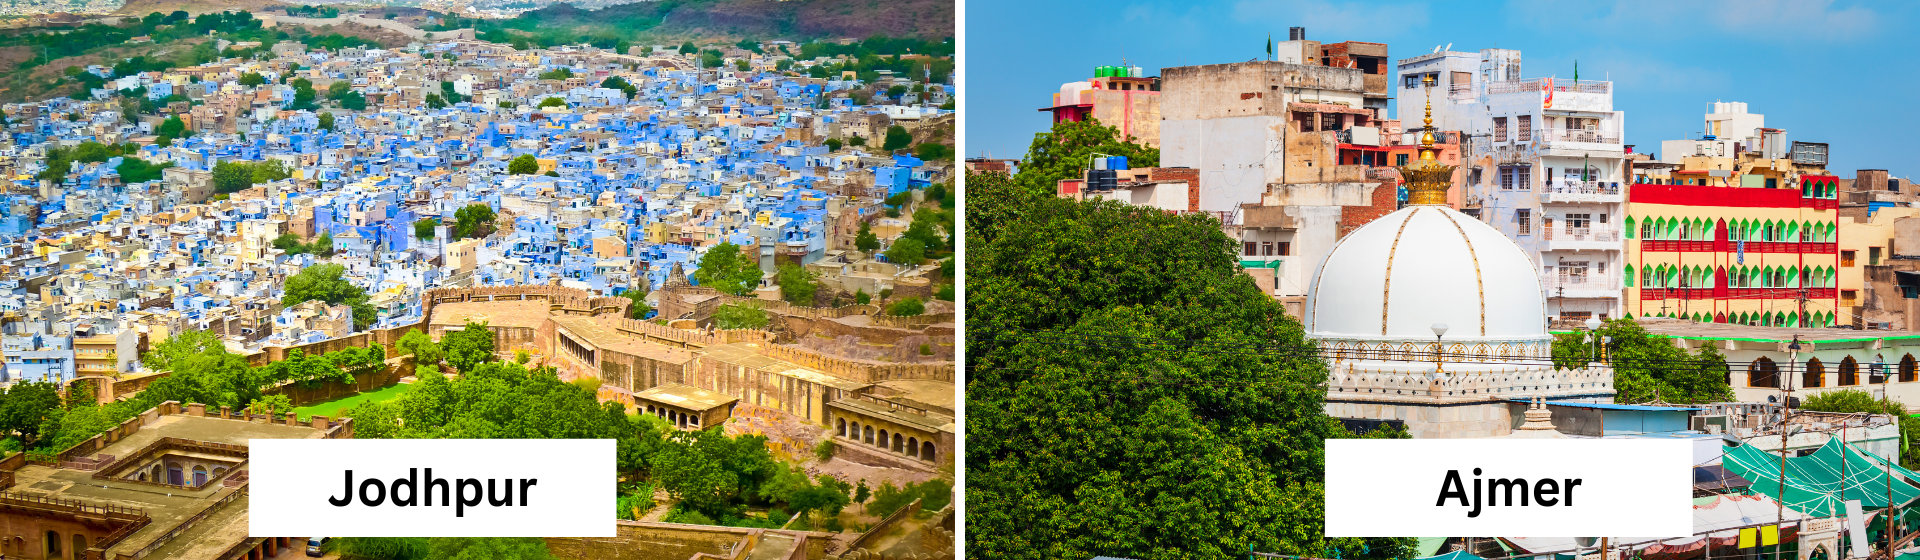 10-day tour package for Jaisalmer, Jaipur, Jodhpur, Ajmer, Udaipur and Mount Abu in Rajasthan, India.